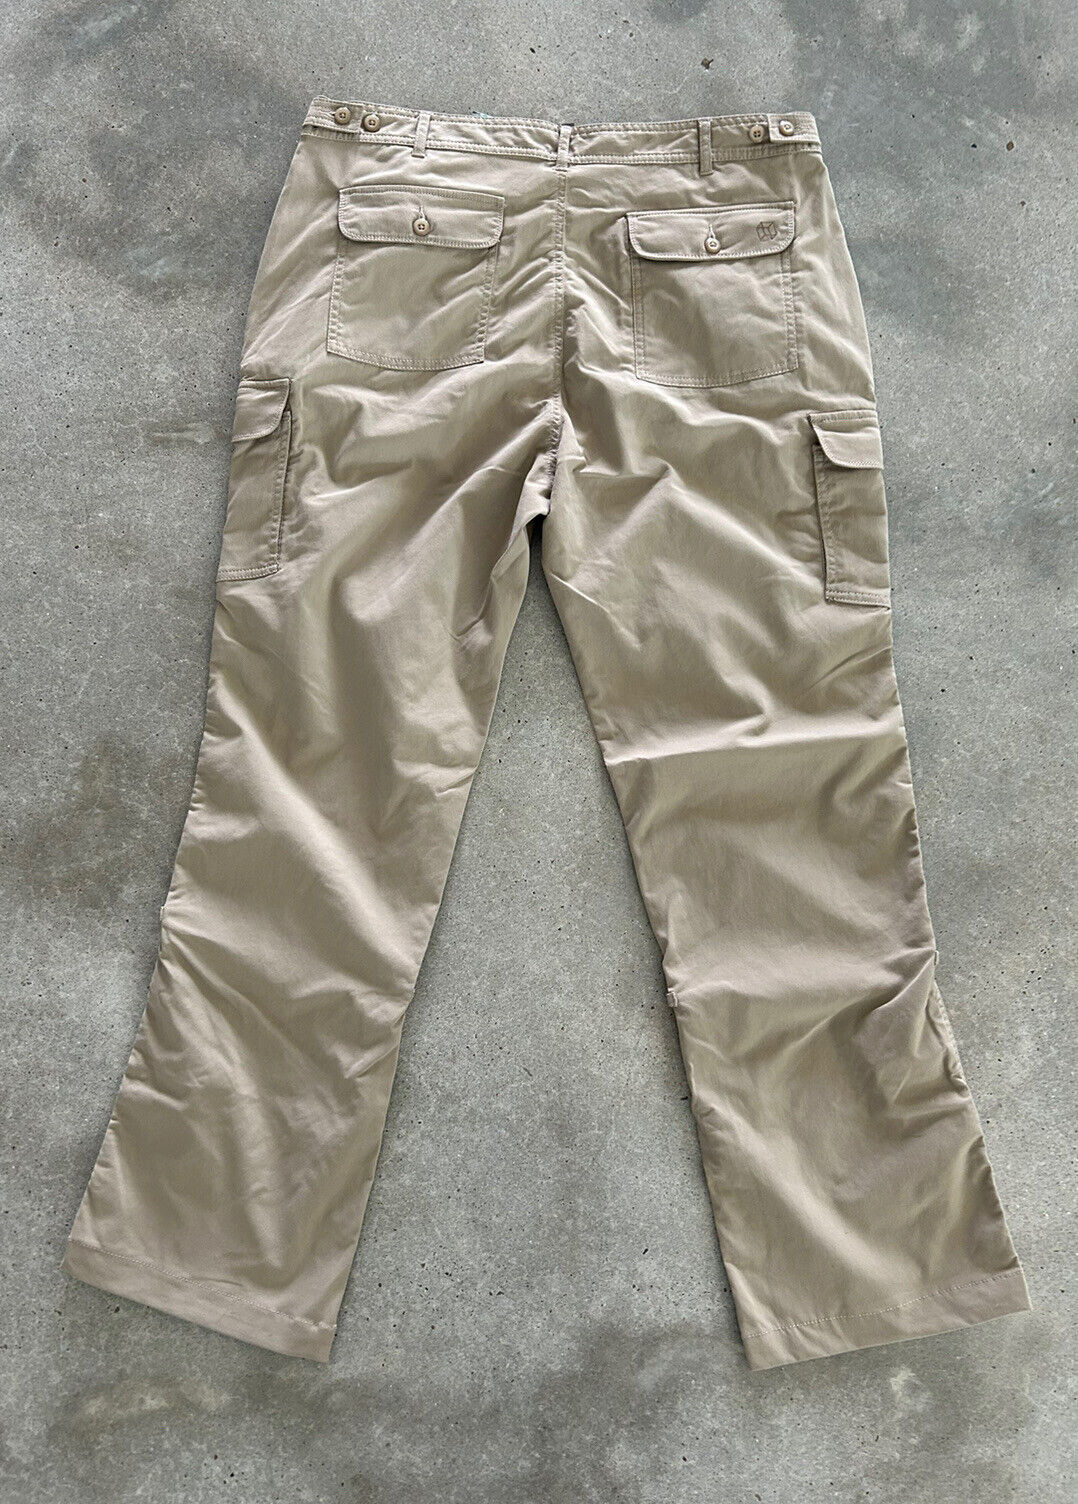 Edelsteen Om toevlucht te zoeken Conceit Clothing Arts P Cubed Pick Pocket Proof Travel Pants Khaki Size 14 Petite  NWT | eBay